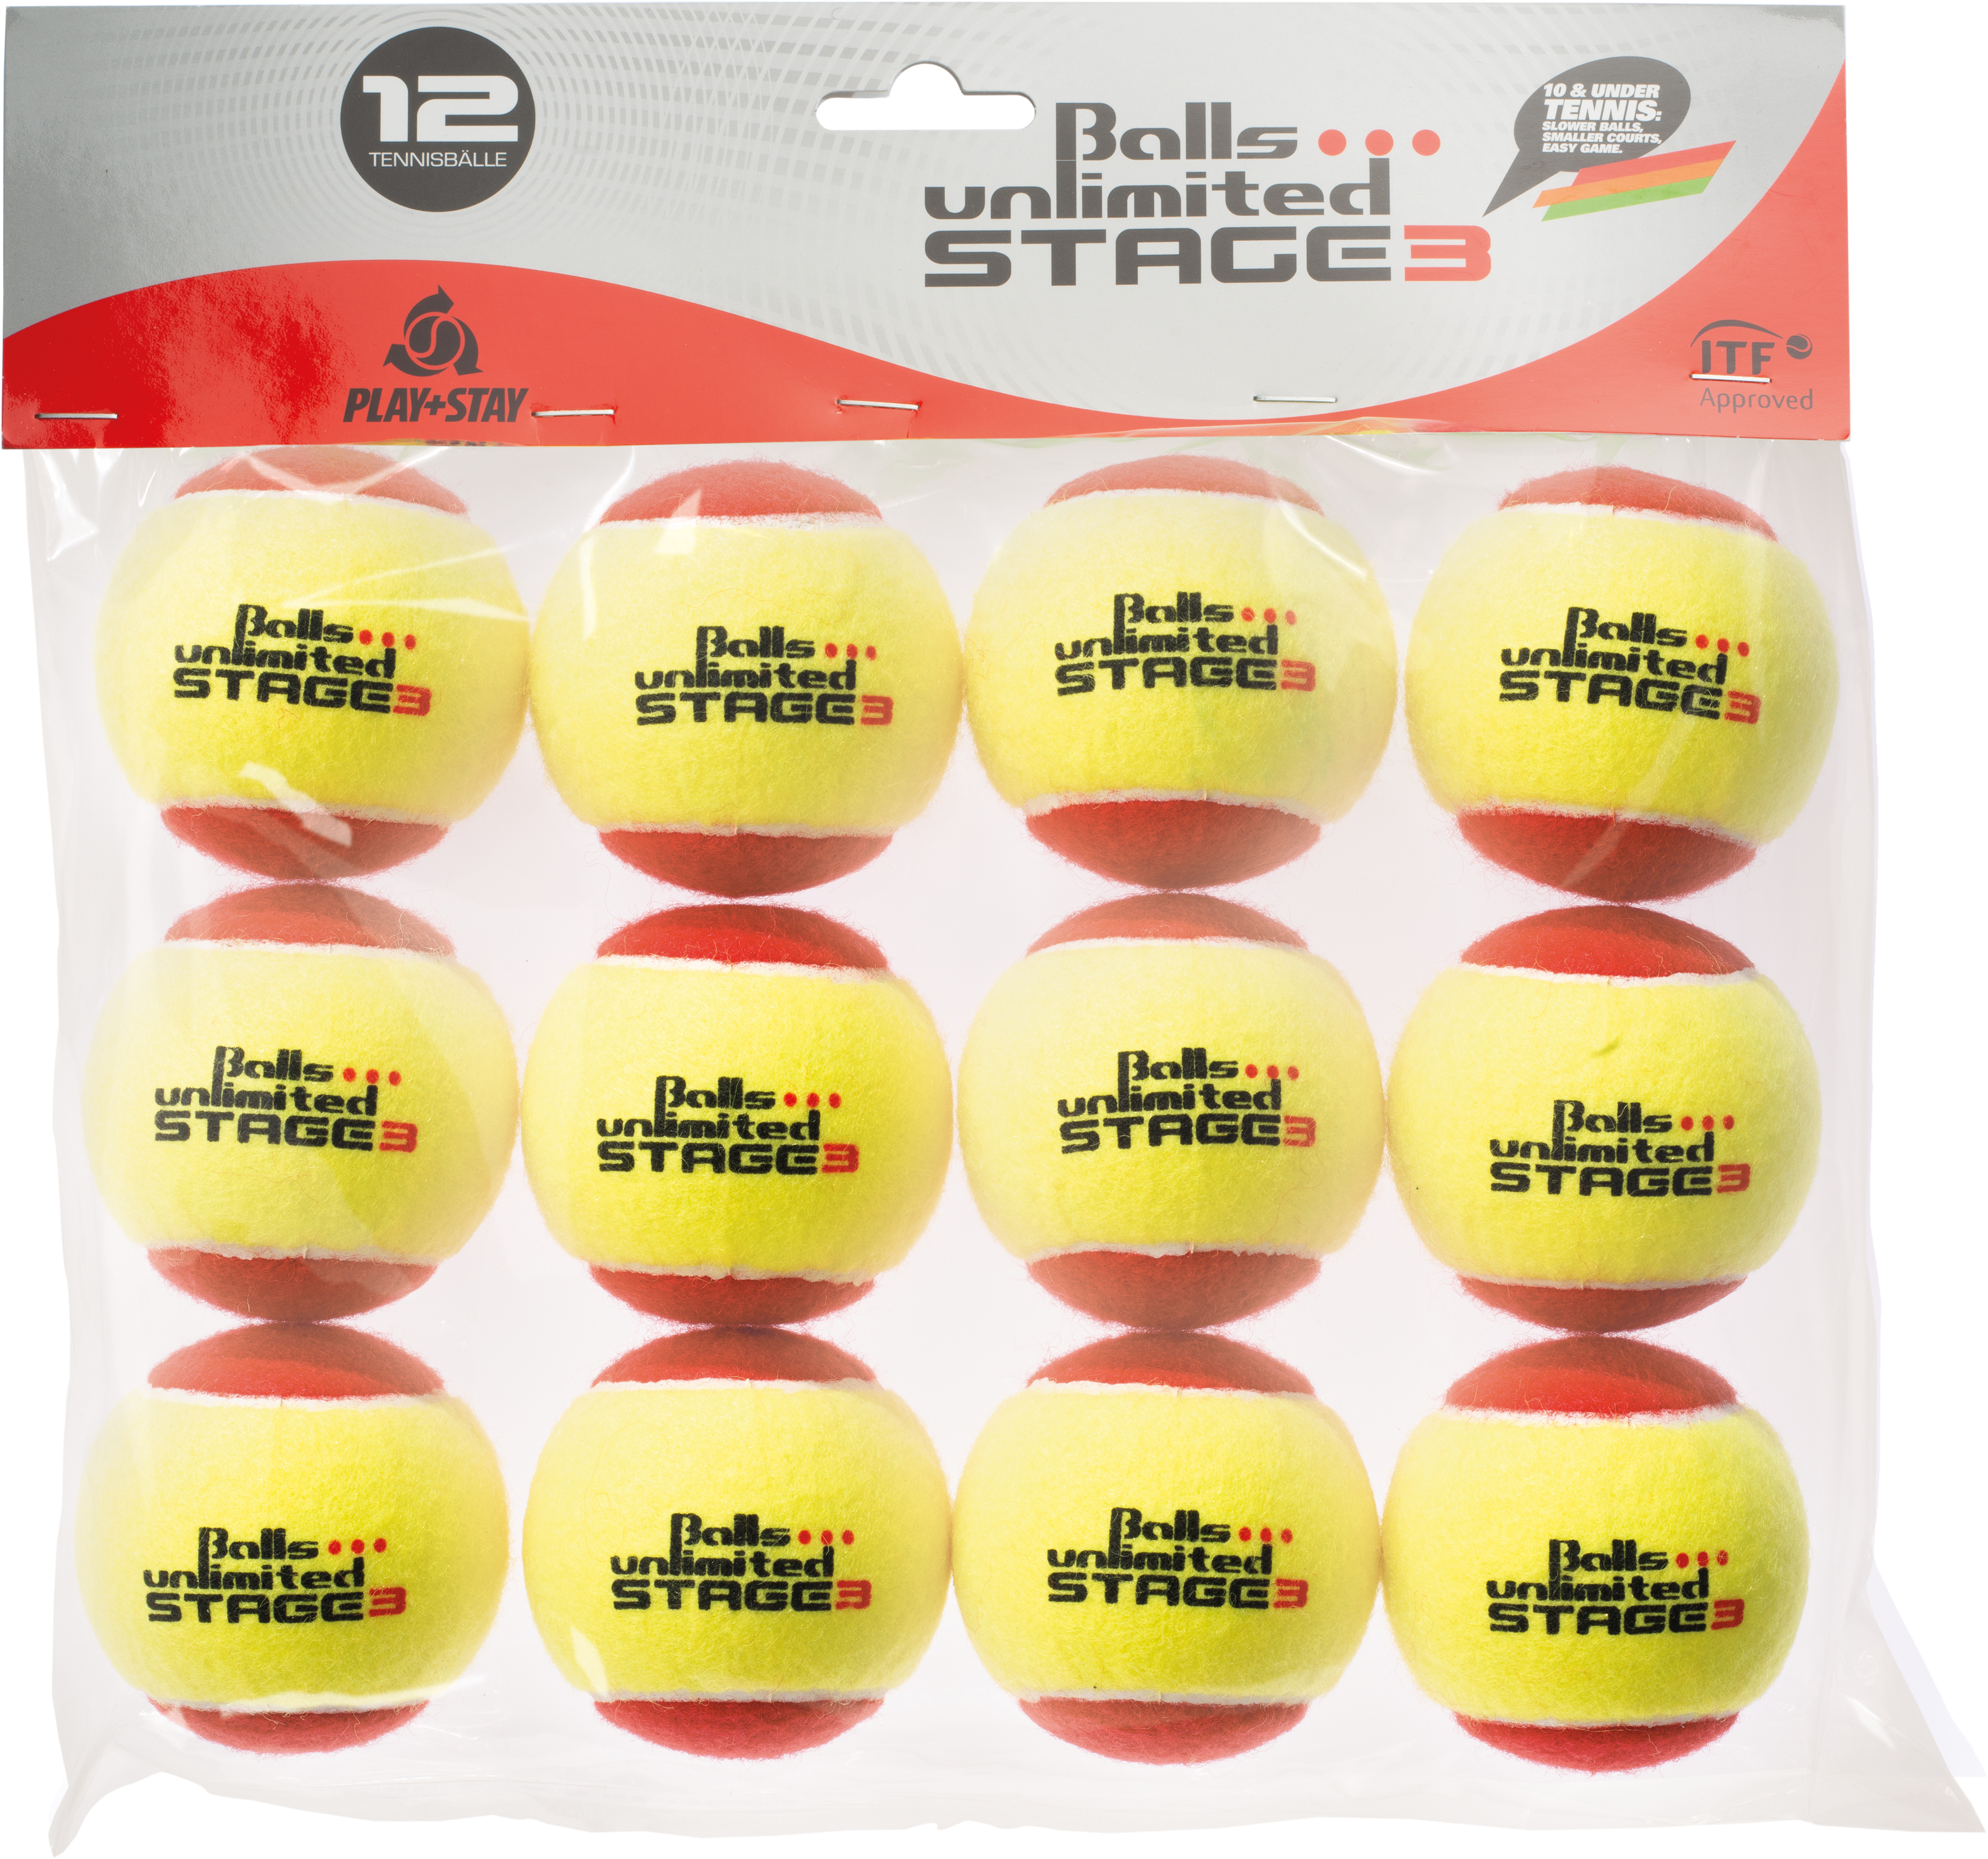 Tennisball Balls unlimited Stage 3